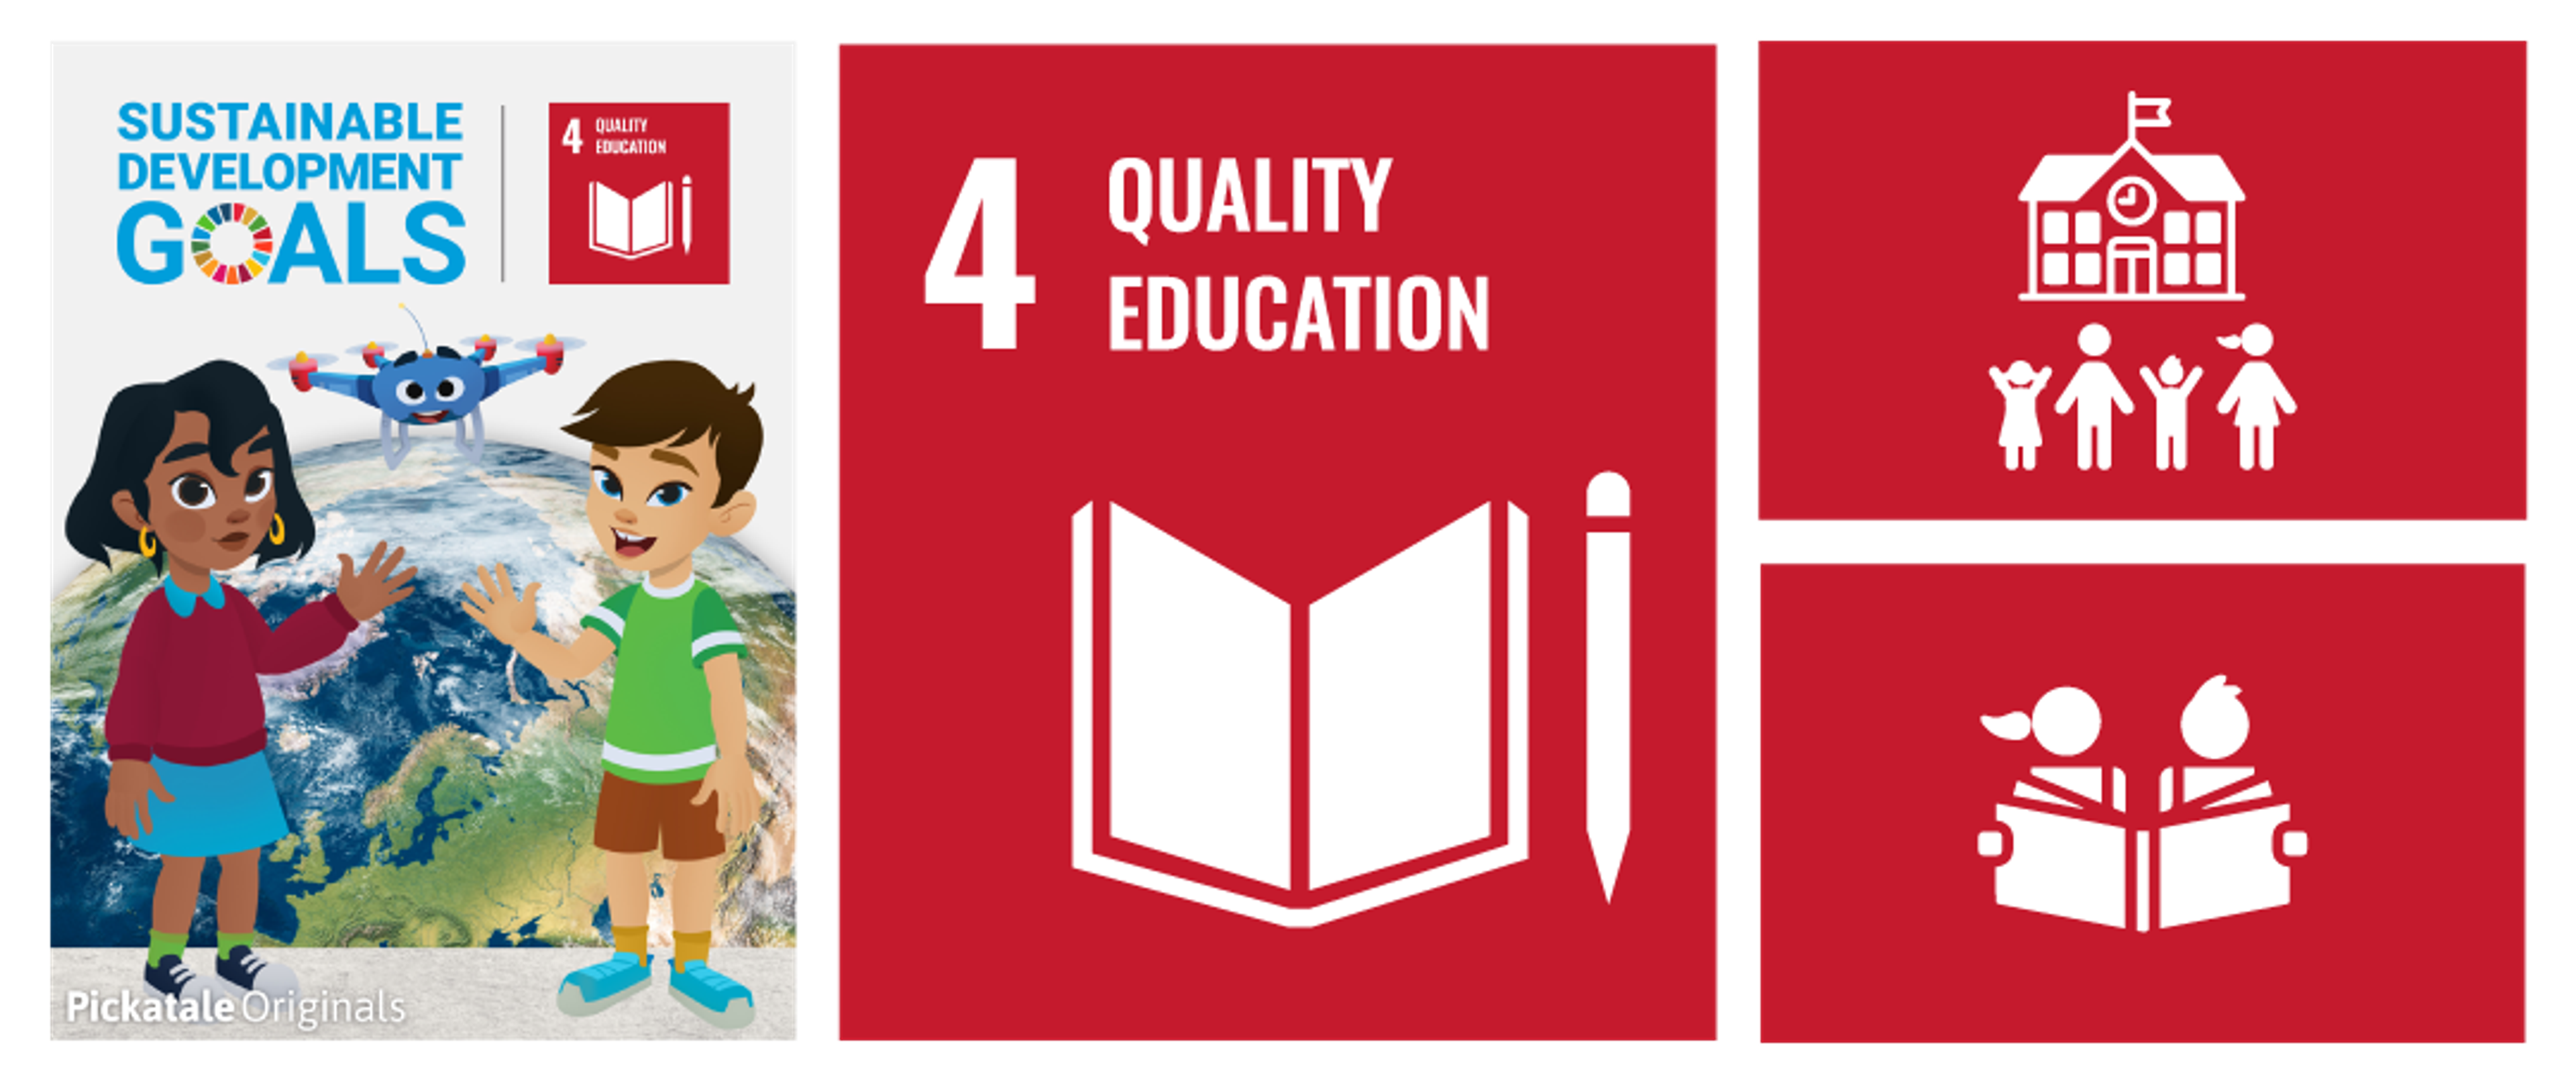 Pickatale Originals on Sustainable Development Goals 4: Quality Education